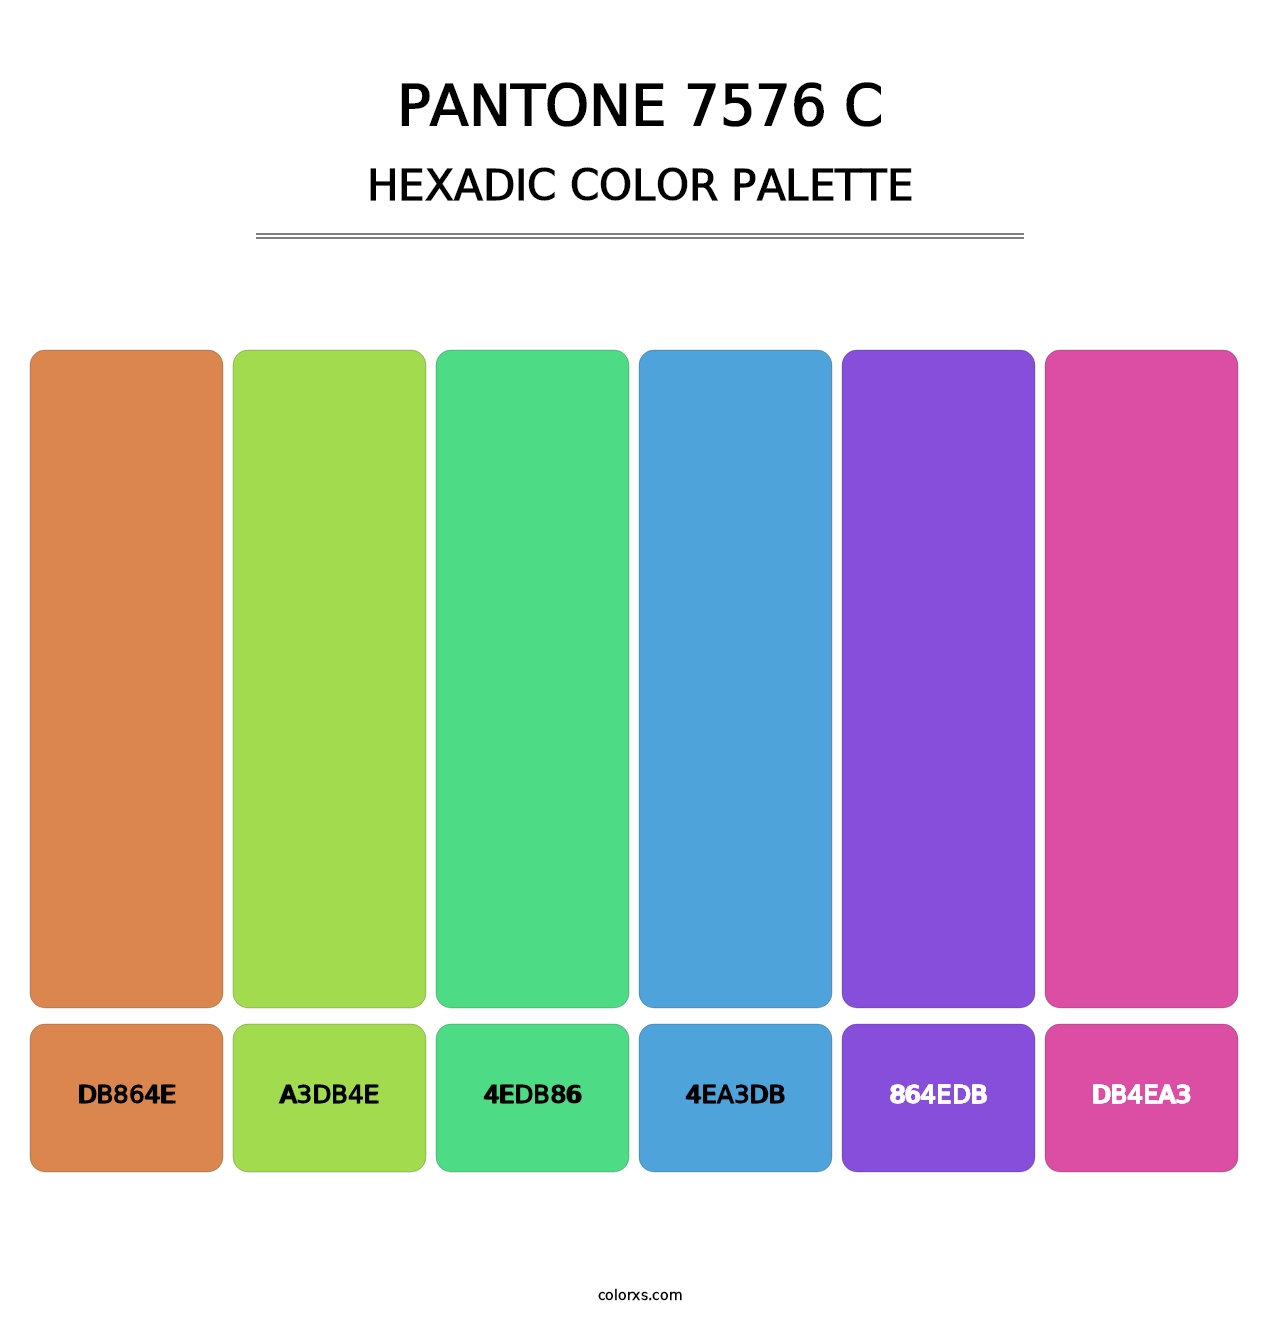 PANTONE 7576 C - Hexadic Color Palette